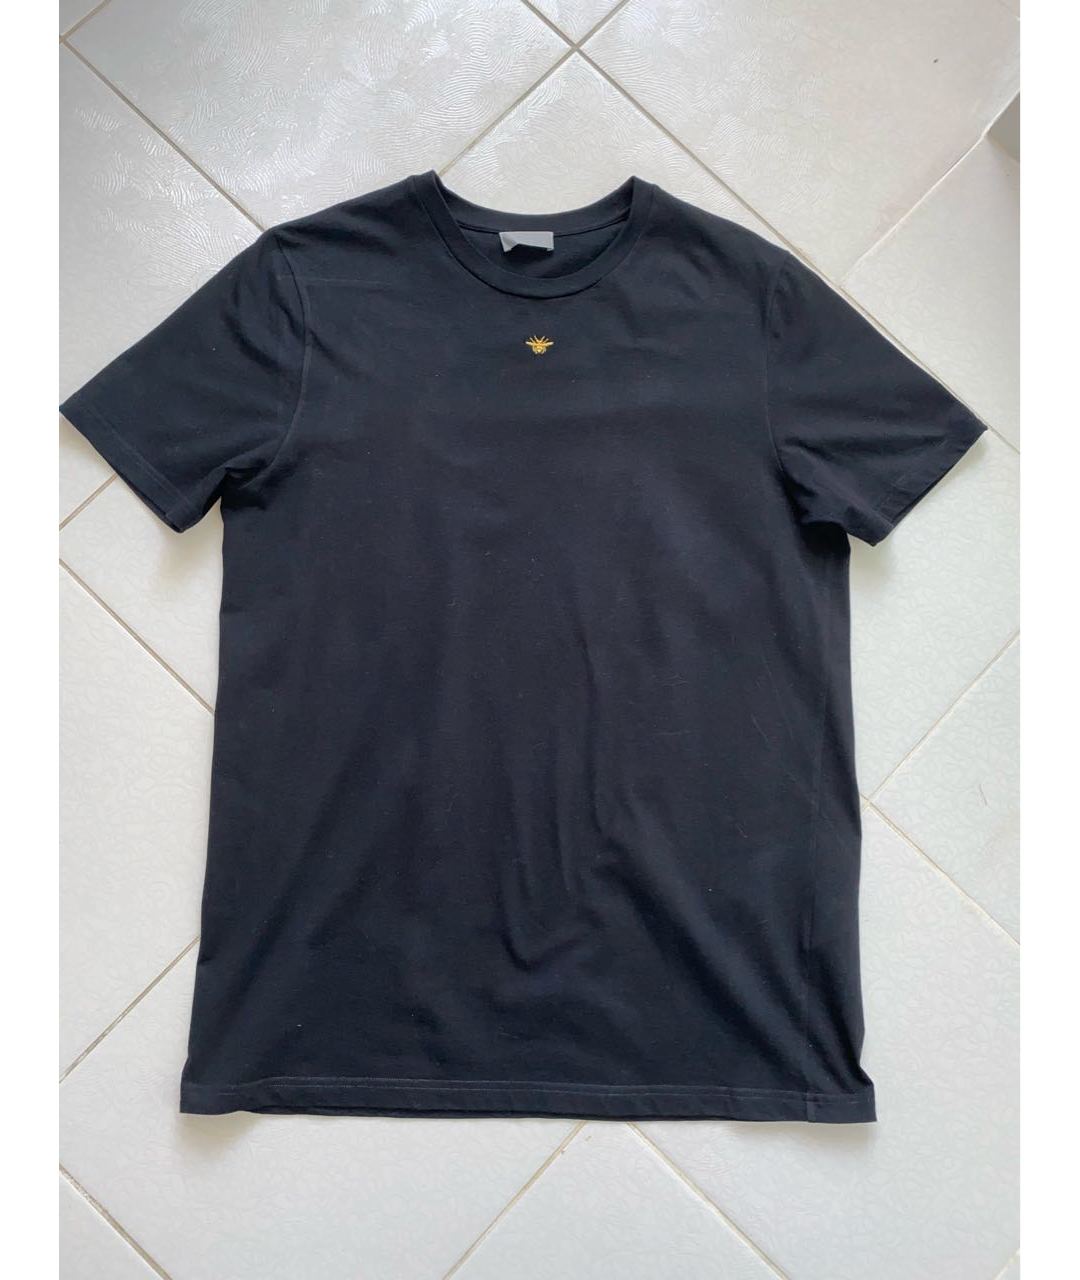 CHRISTIAN DIOR PRE-OWNED Черная хлопковая футболка, фото 3